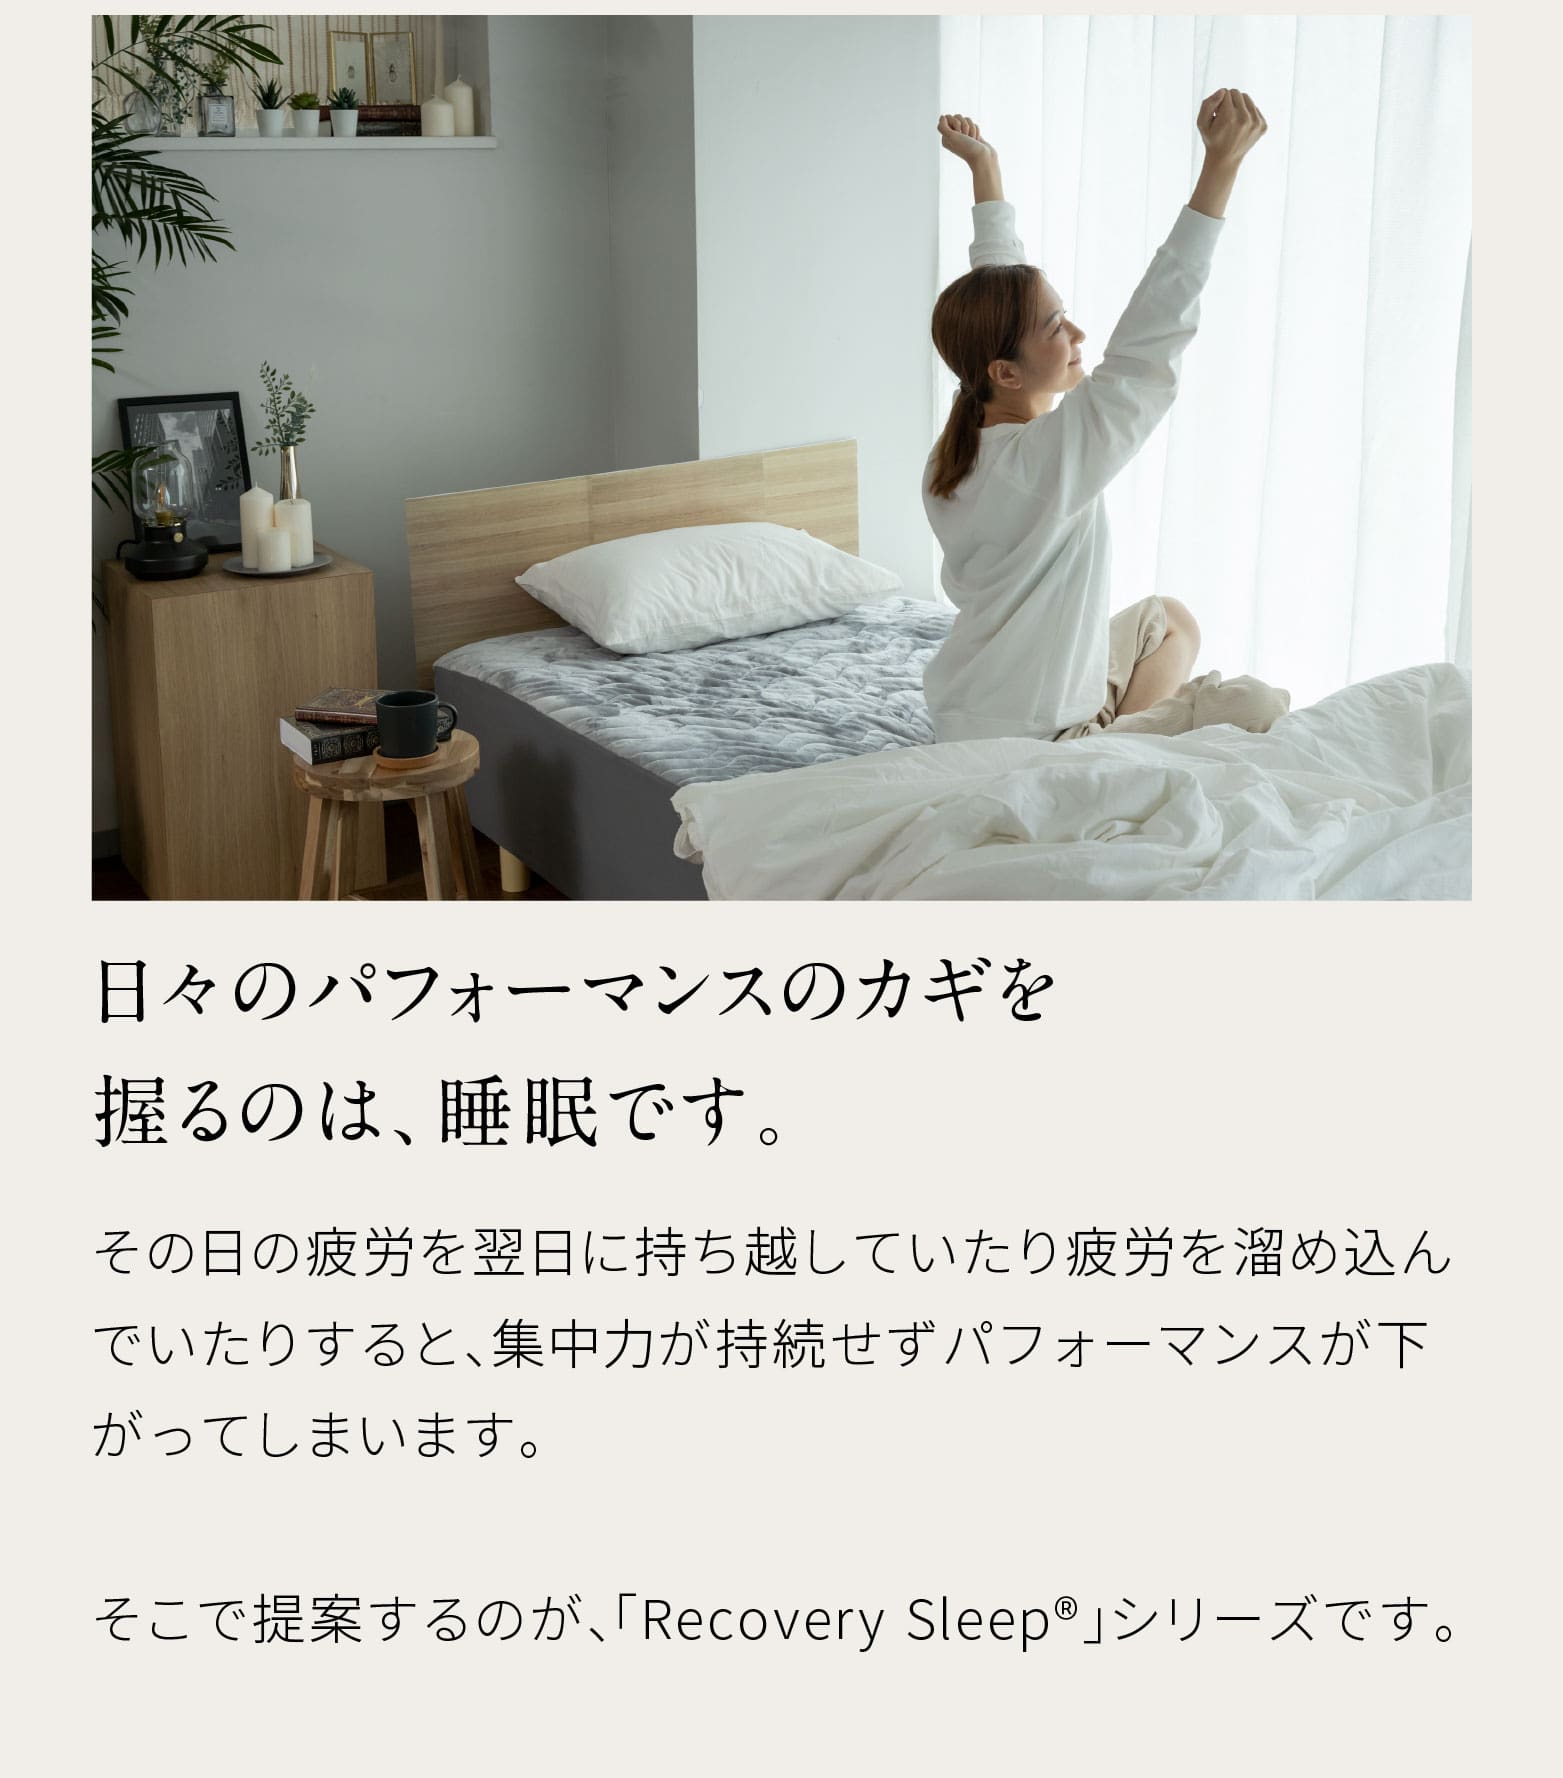 Recovery Sleep トラベルピロー・アイマスク2種セット | 【公式